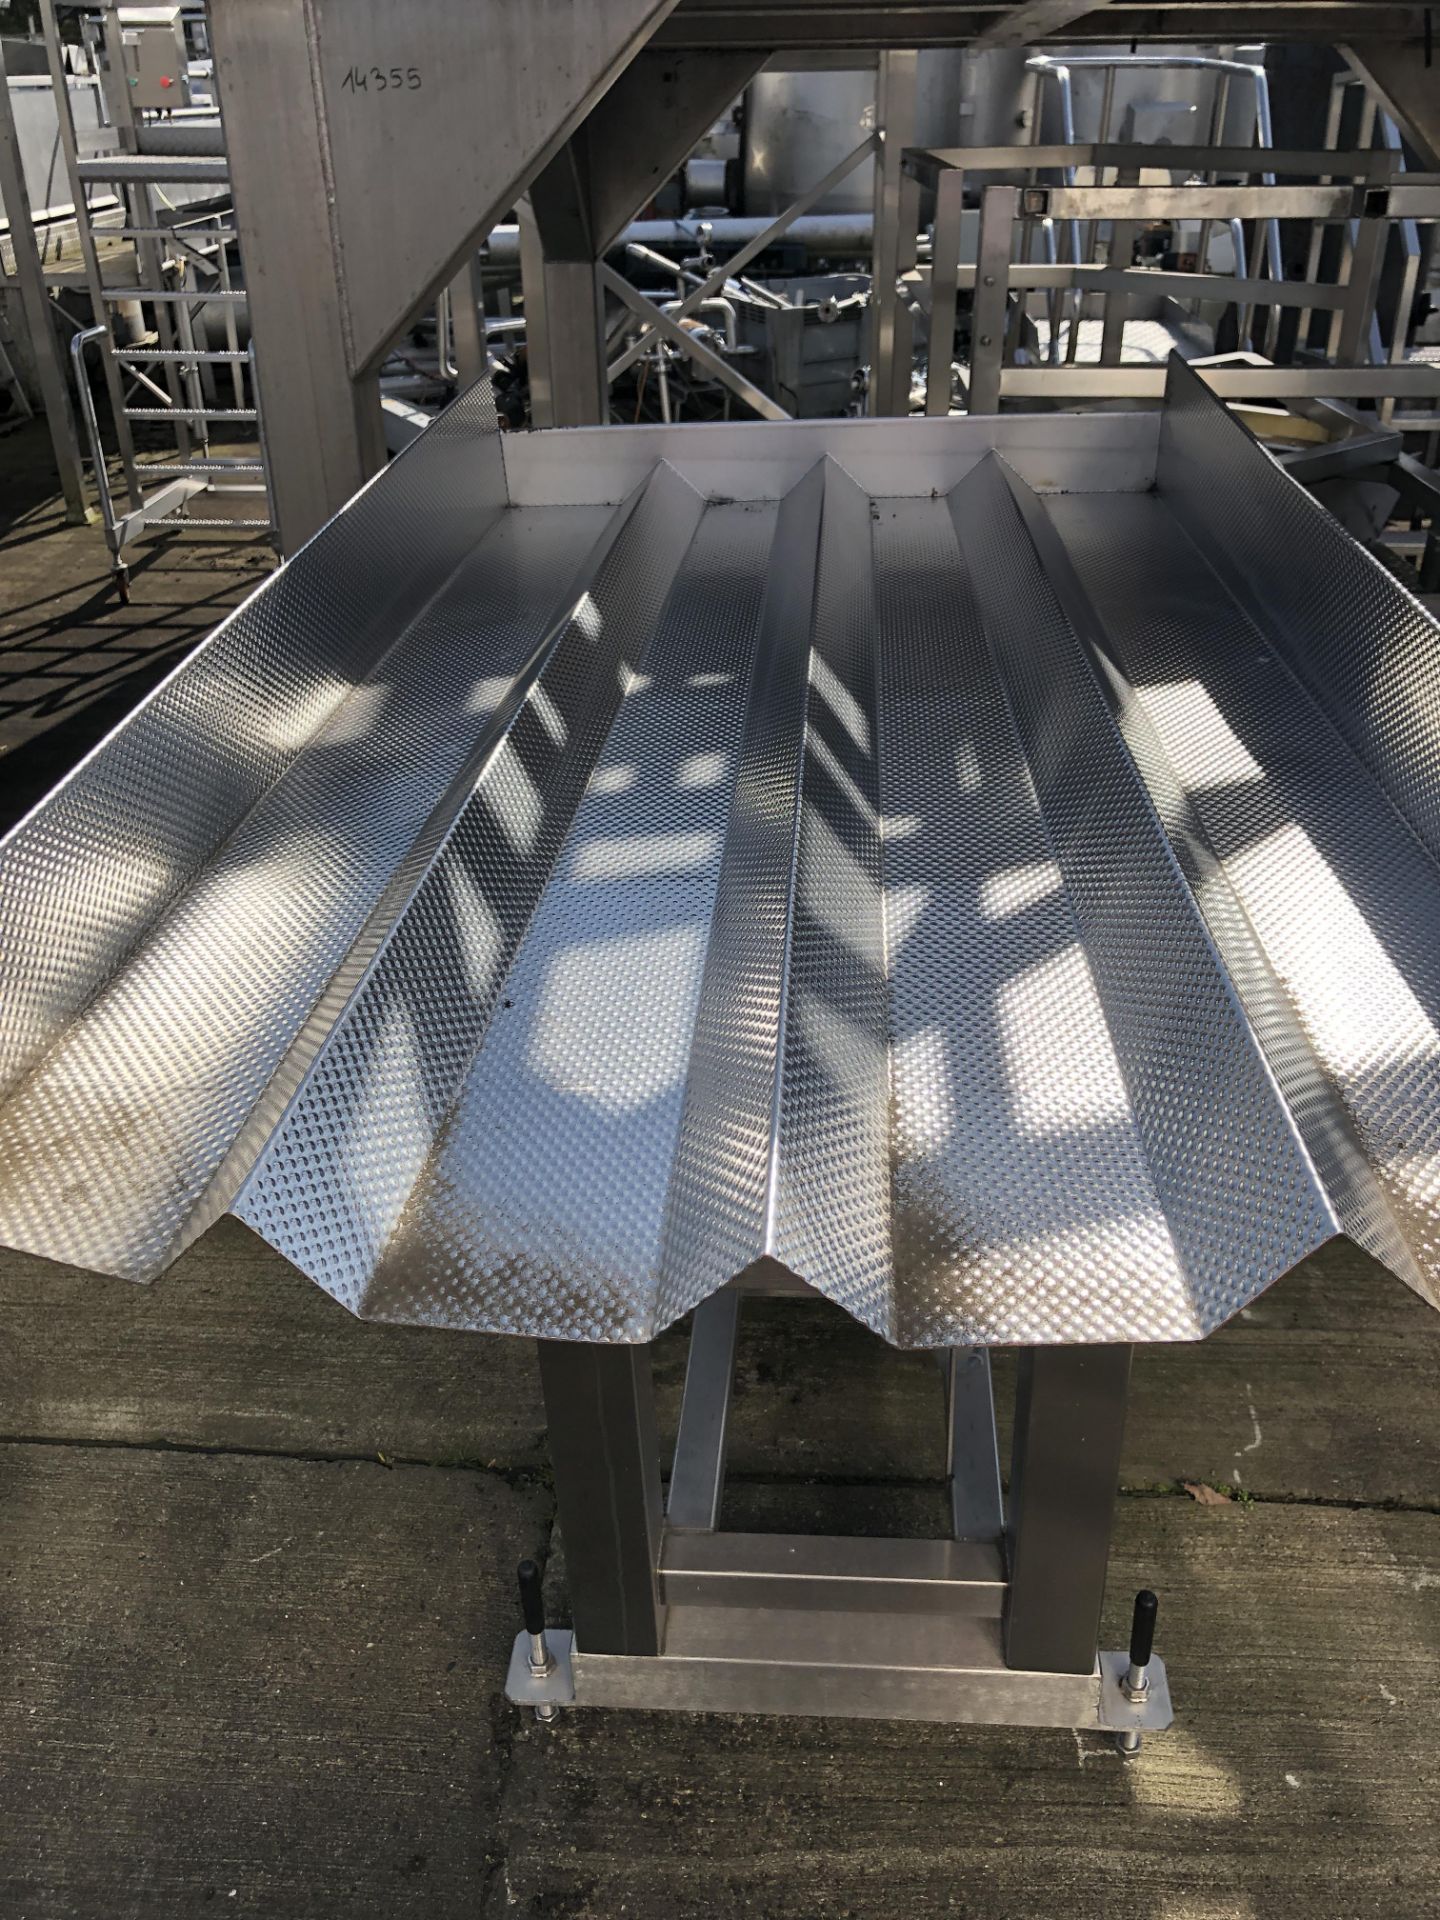 Stainless Steel Vibratory Feeder / Conveyor - Image 2 of 3